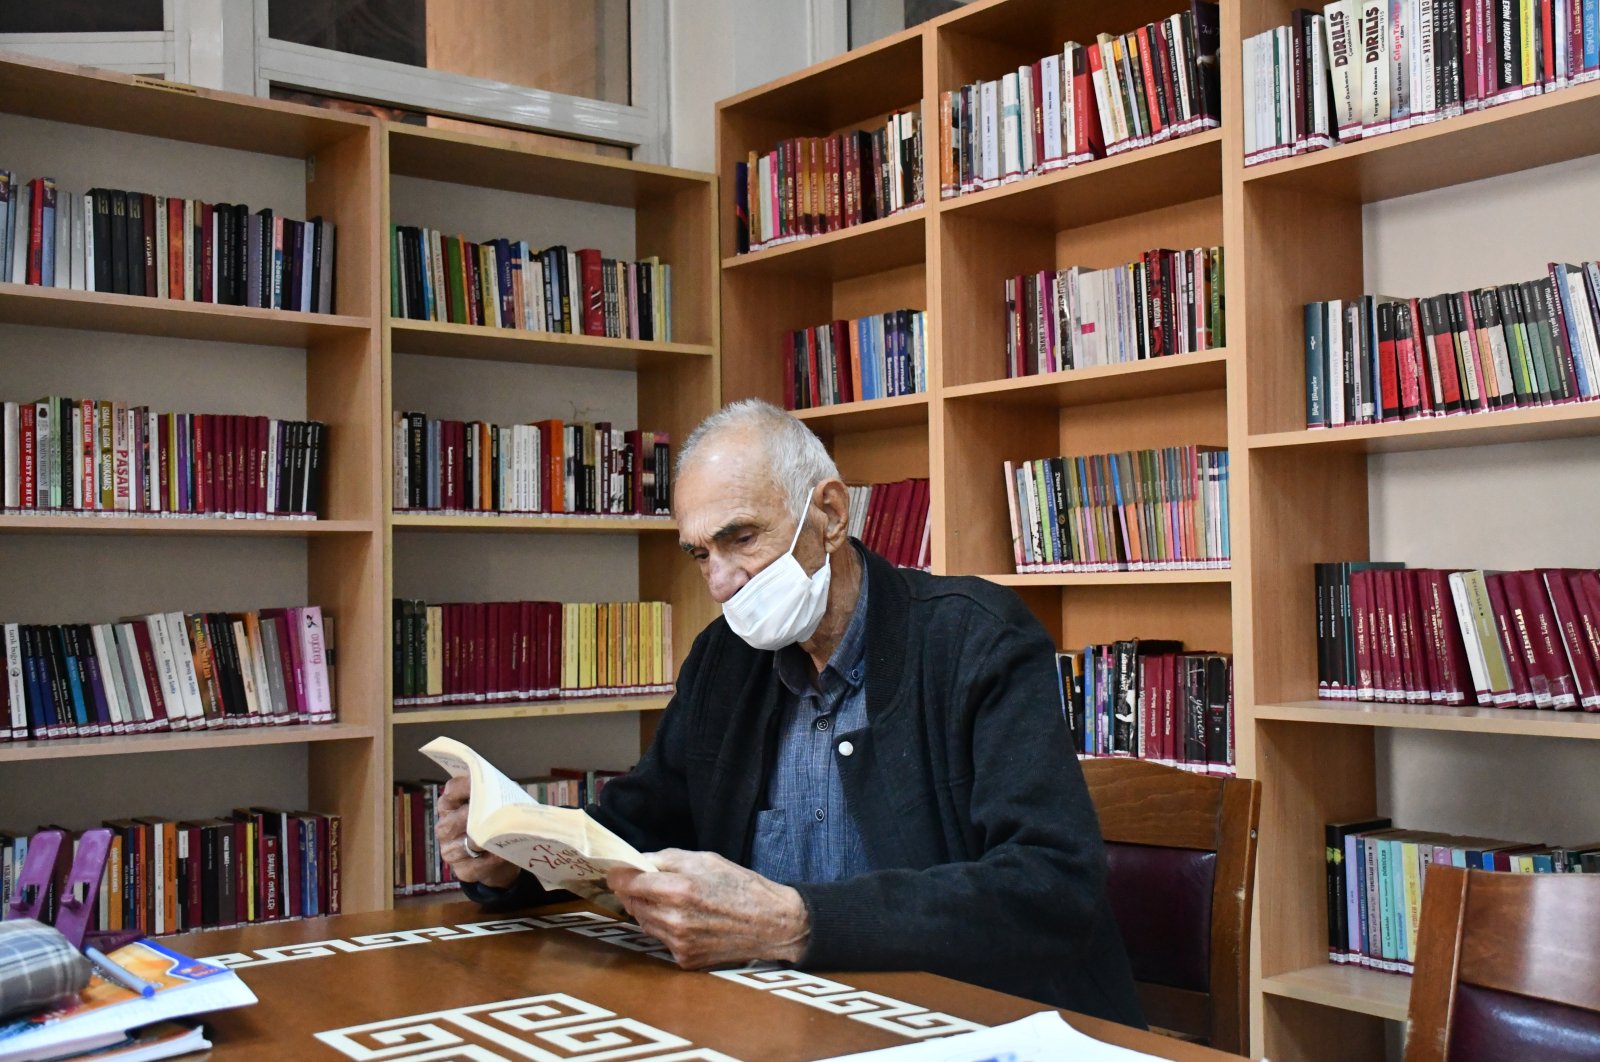 Hacı Ahmet Gönen reads a book at the library, in Kahramanmaraş, southern Turkey, Sept. 25, 2021. (AA Photo)